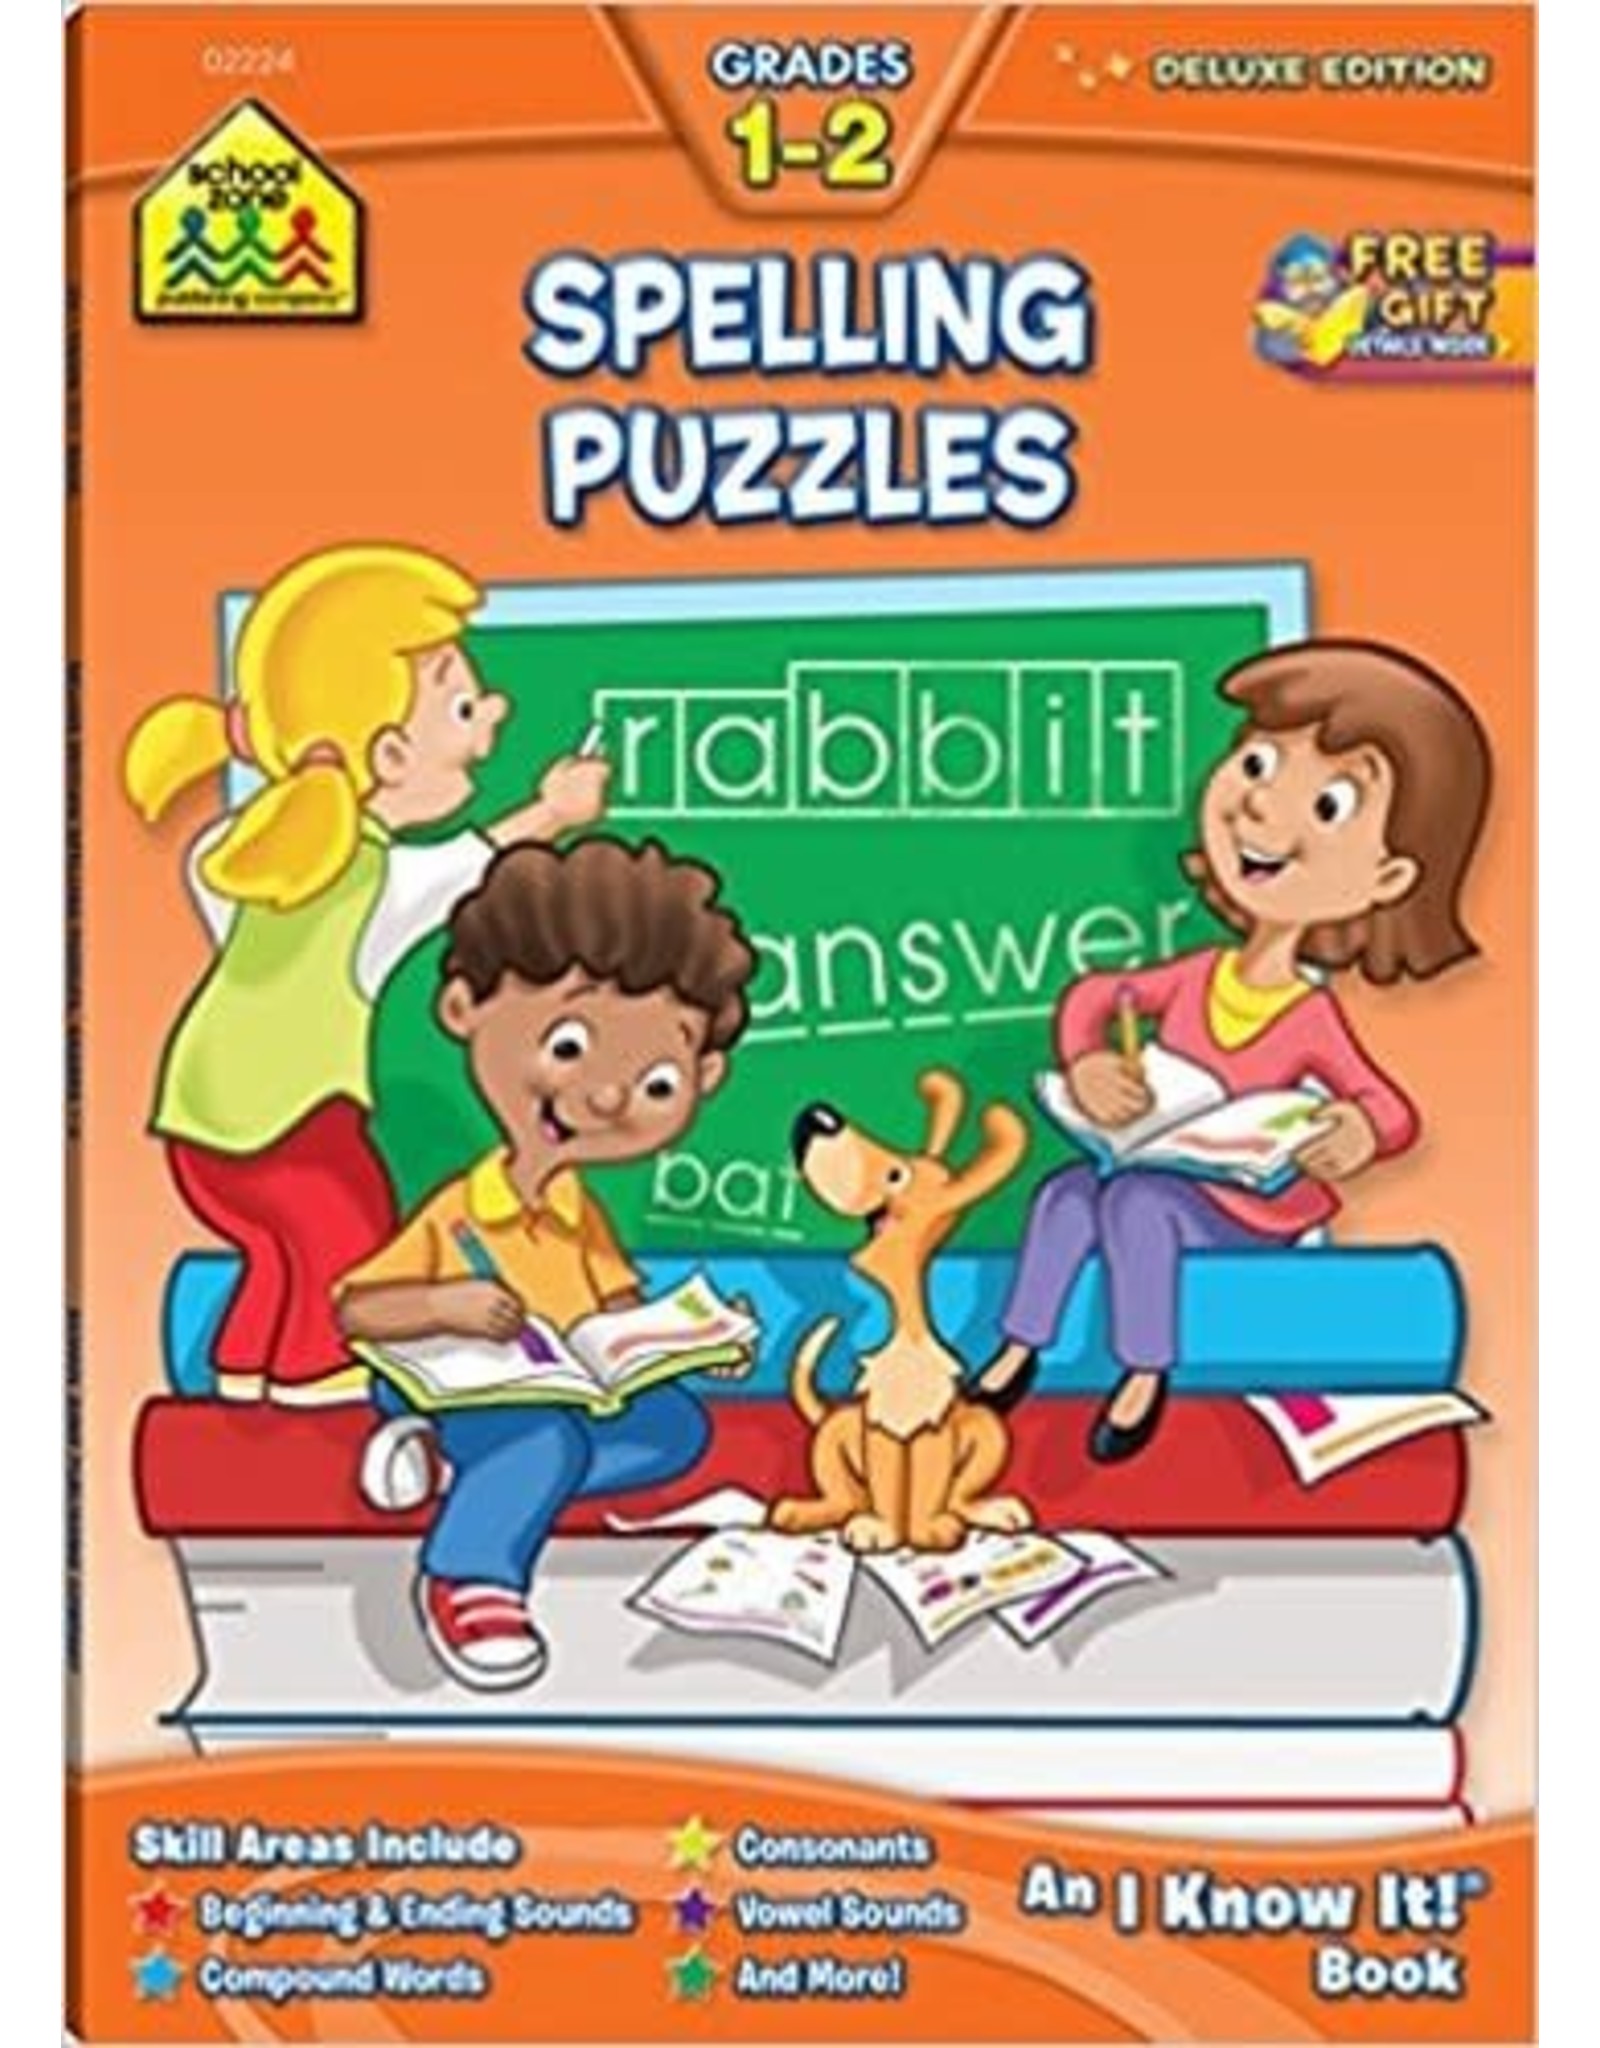 Spelling Puzzles - Grade 1